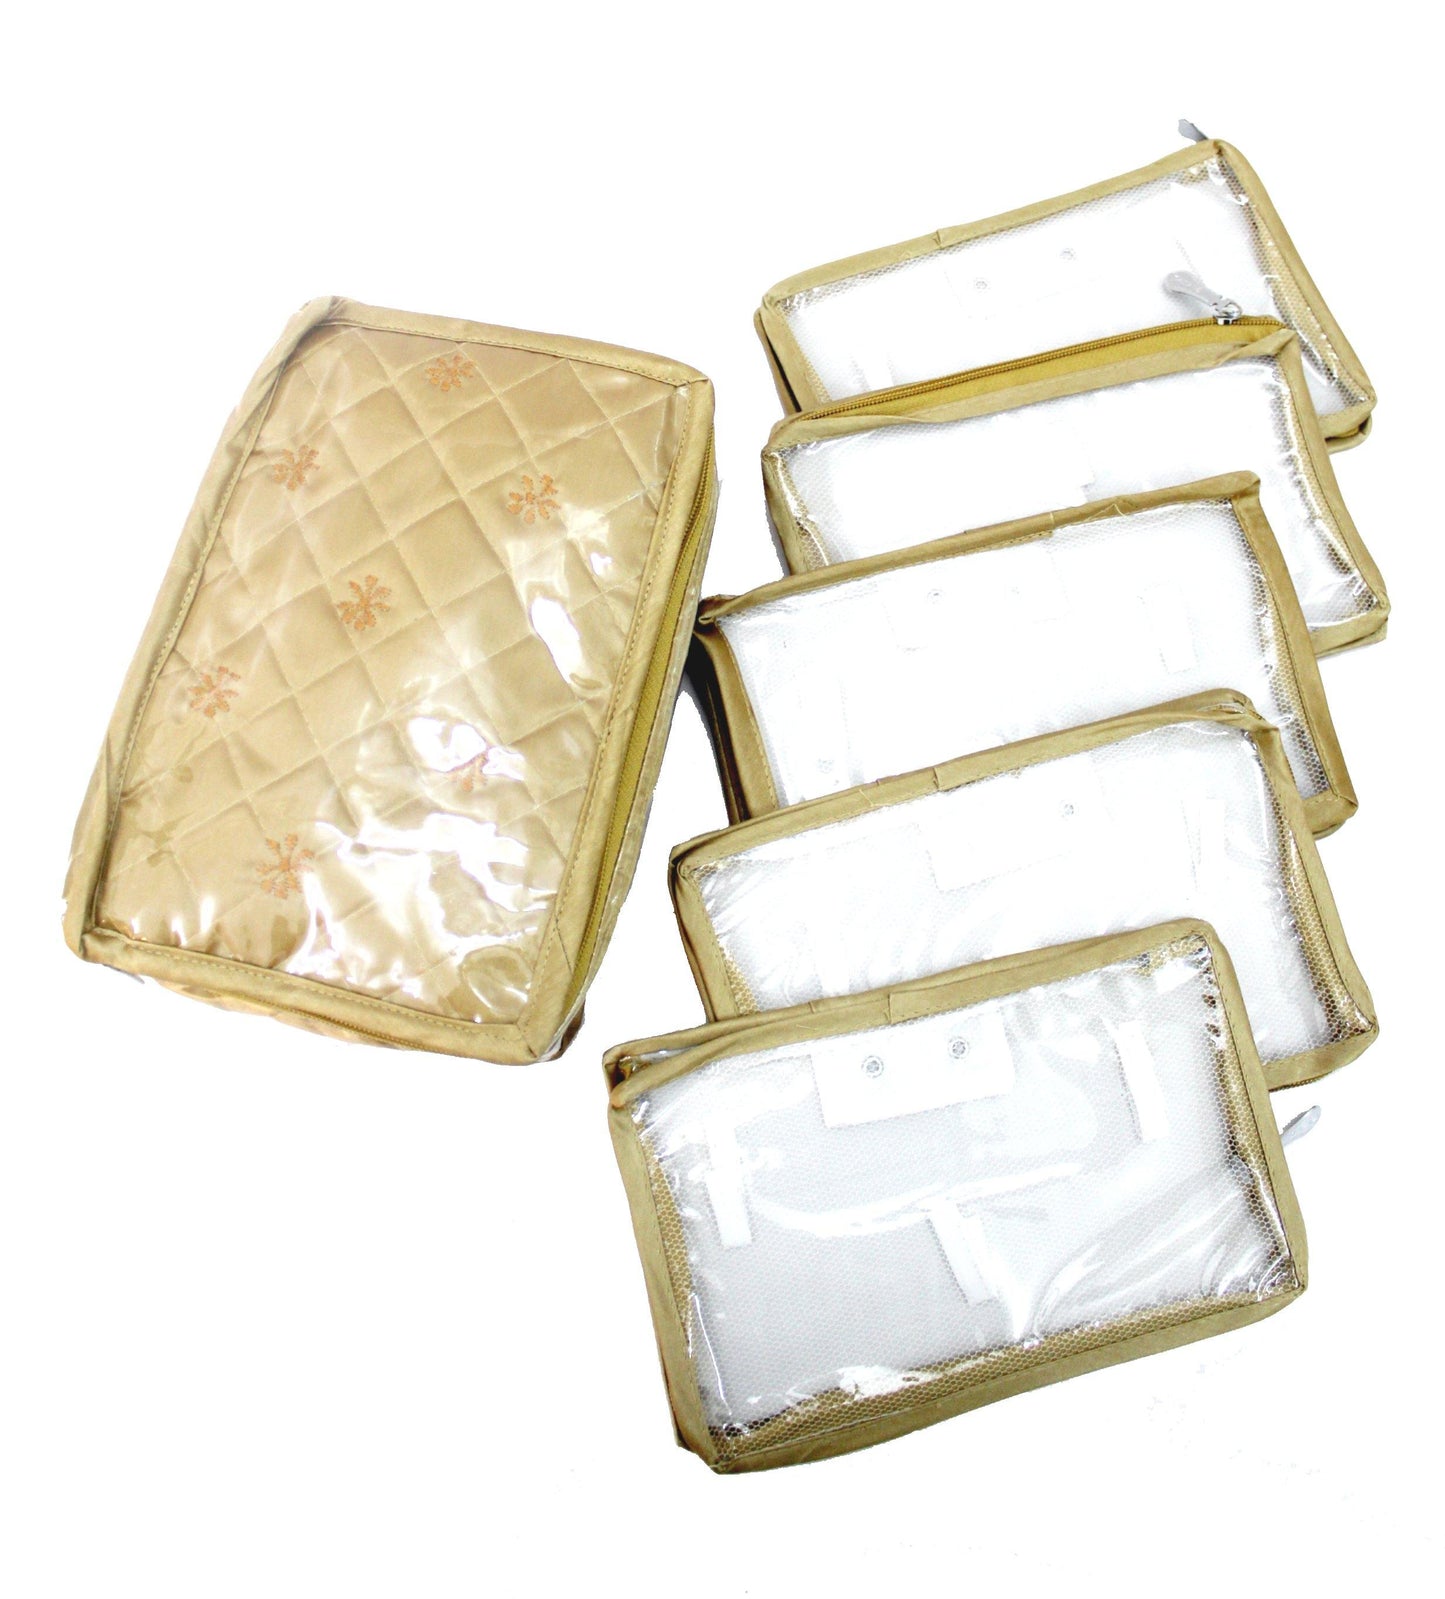 Indian Petals Multi purpose Jewellery Organiser Foldable Kit Bag Toiletry Cosmetic Grooming Vanity Travel Toiletry Kit - Indian Petals